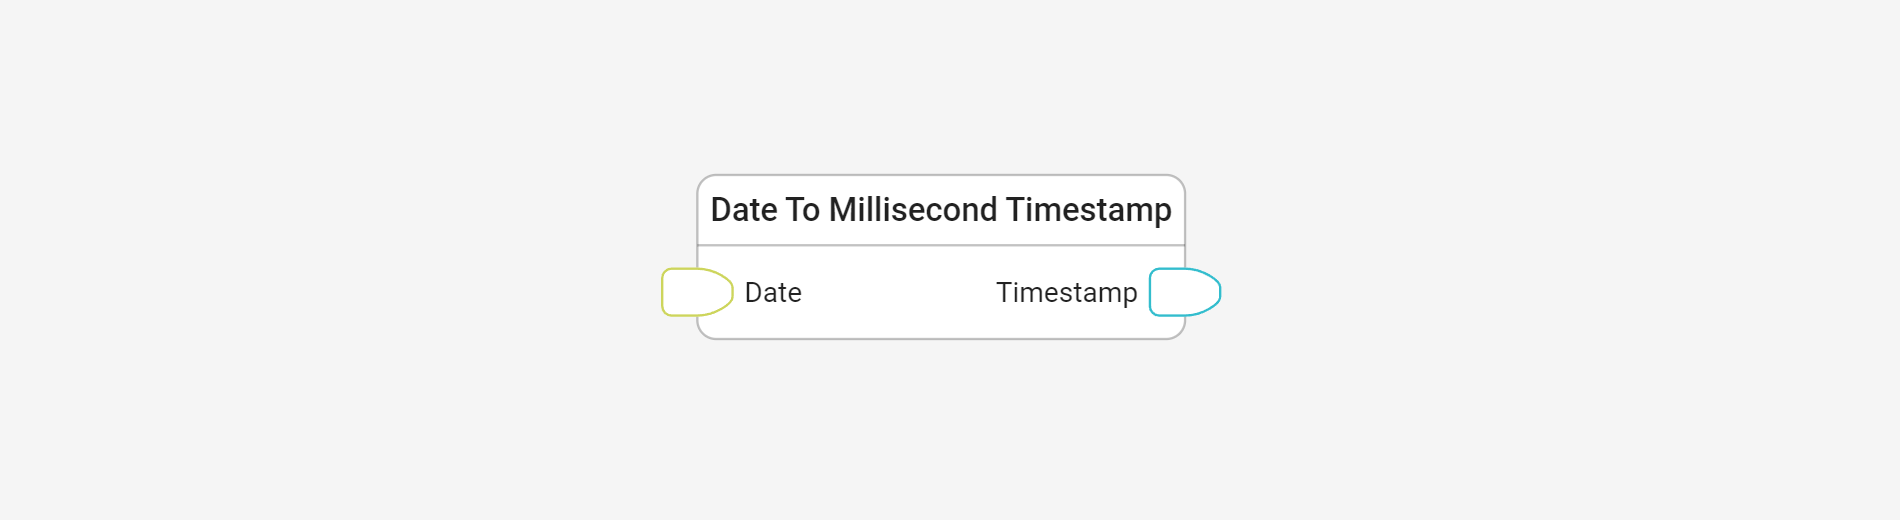 Convert a date to a timestamp